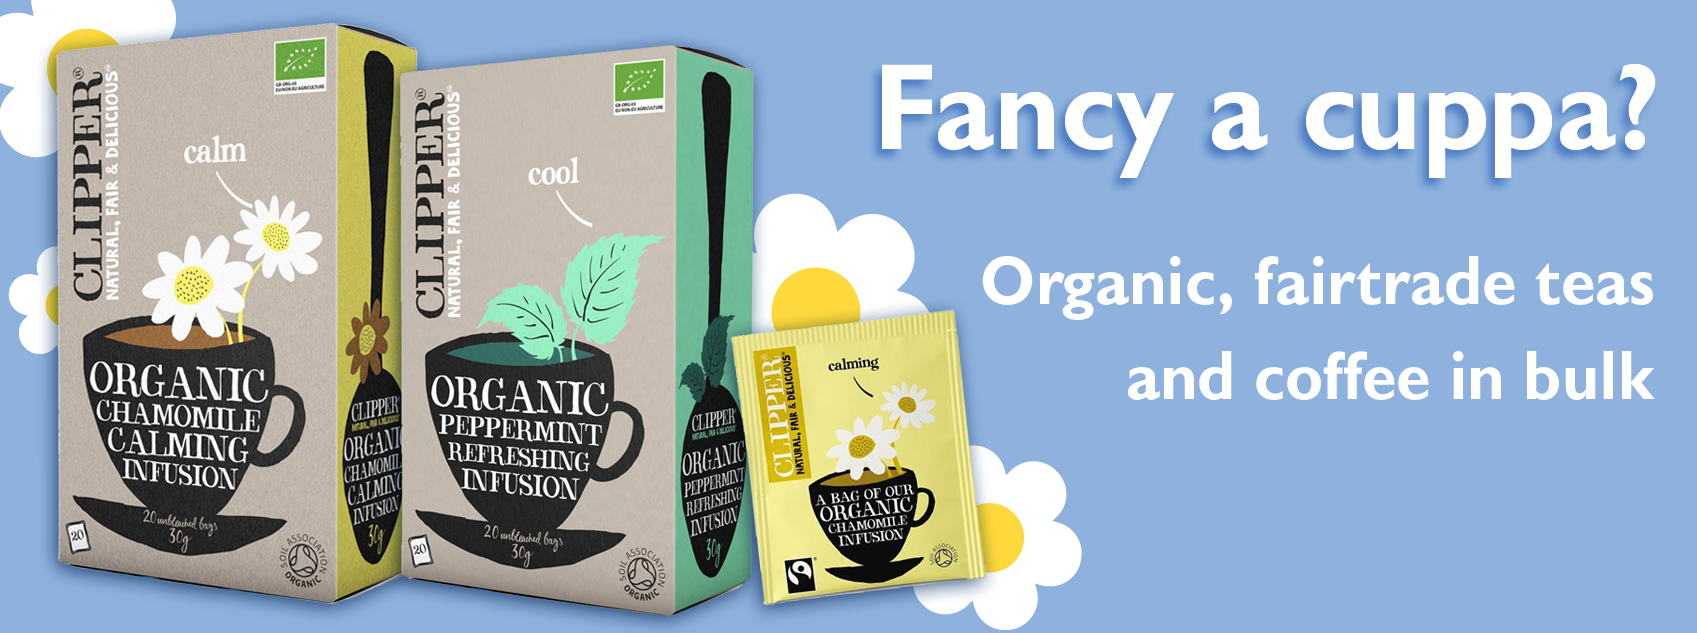 Fancy a cuppa? Organic fairtrade teas and coffee in bulk